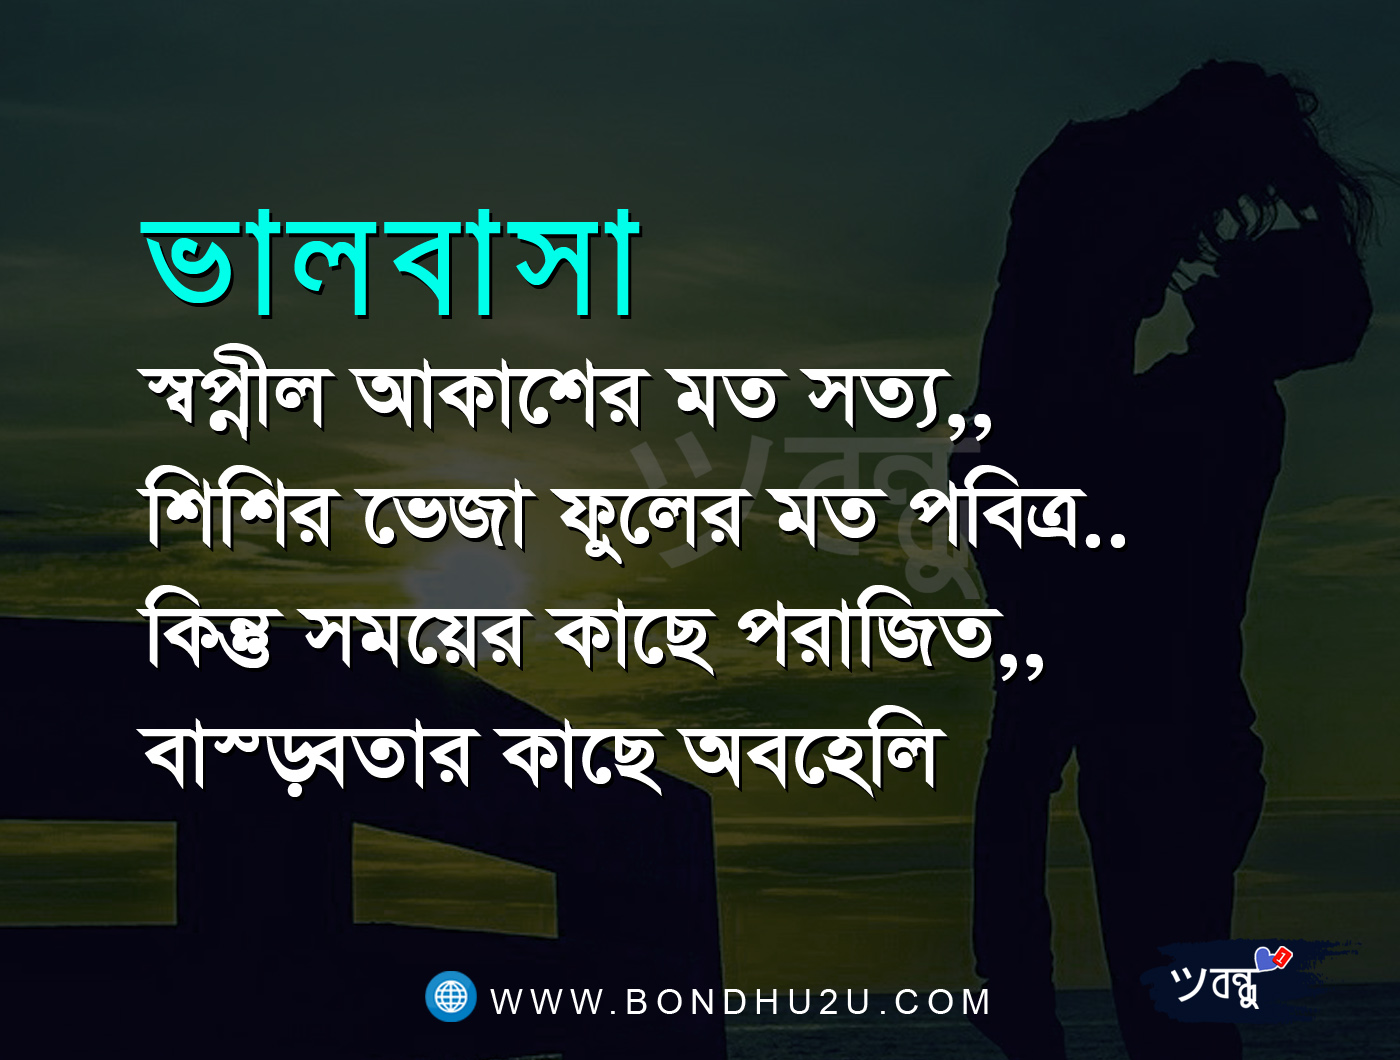 bangla kobita wallpaper download,text,font,photography,recreation,photo caption